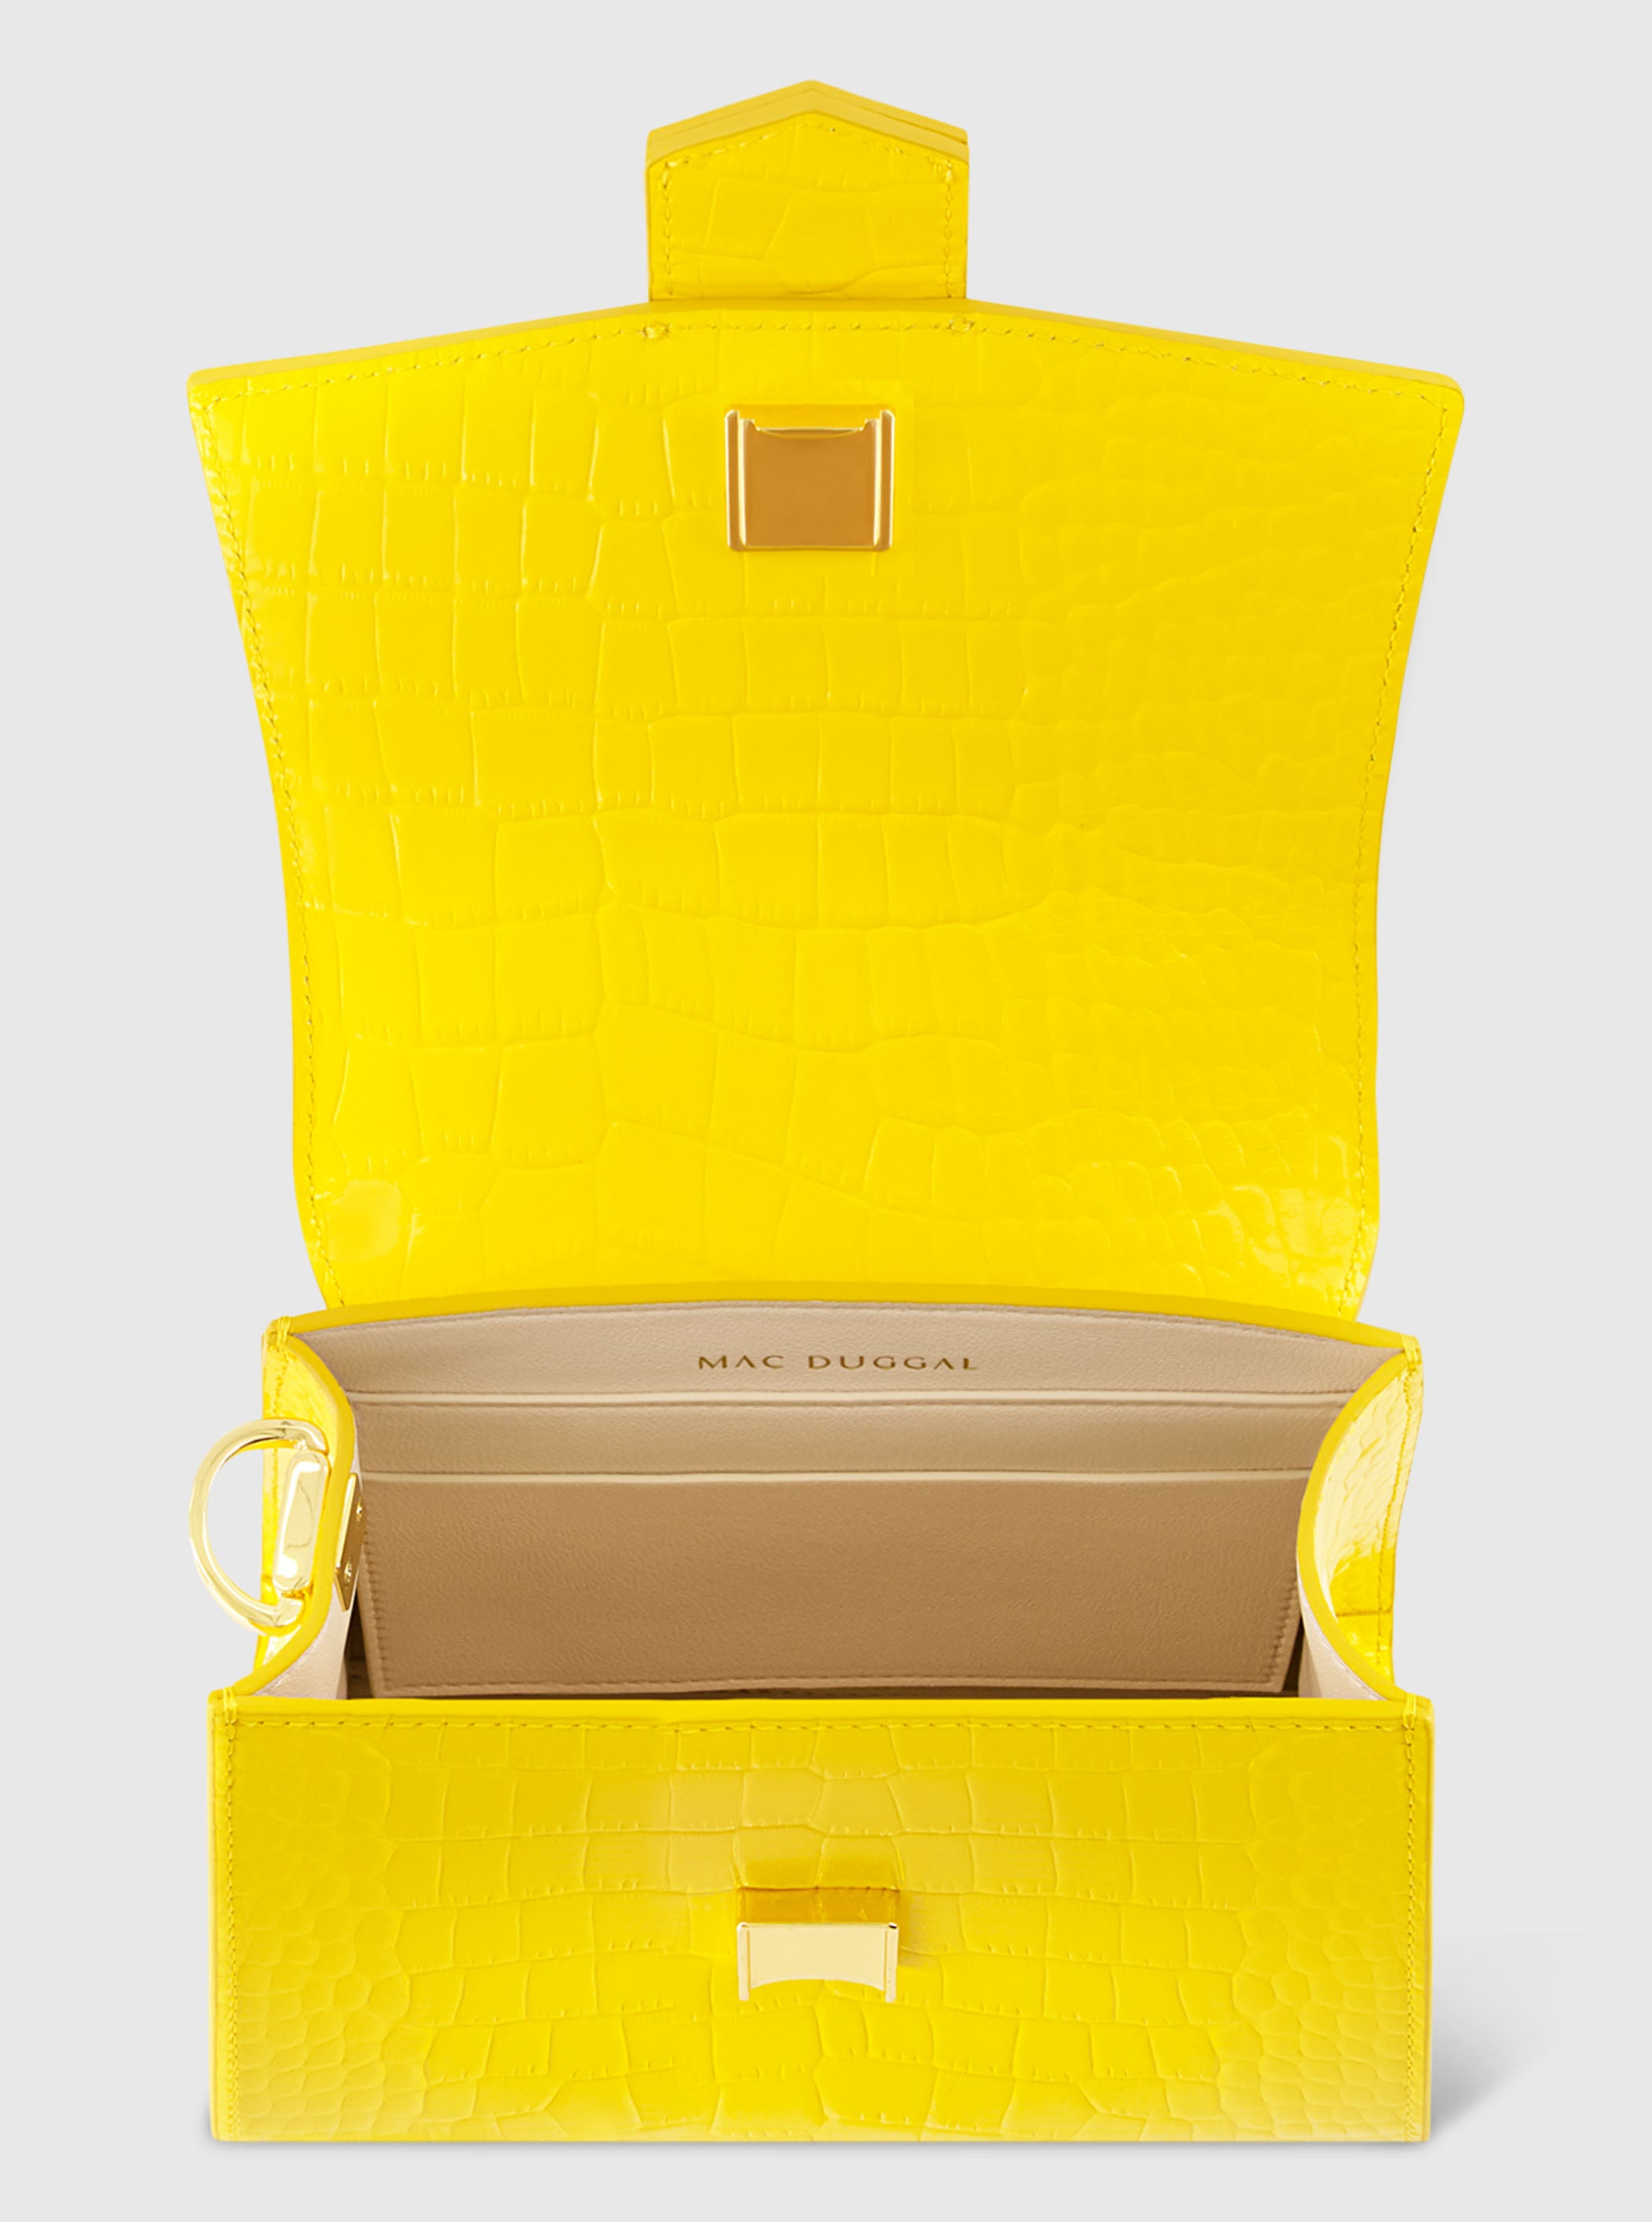 Buckled Mini Croco Sunshine Leather Handbag with Detachable Strap